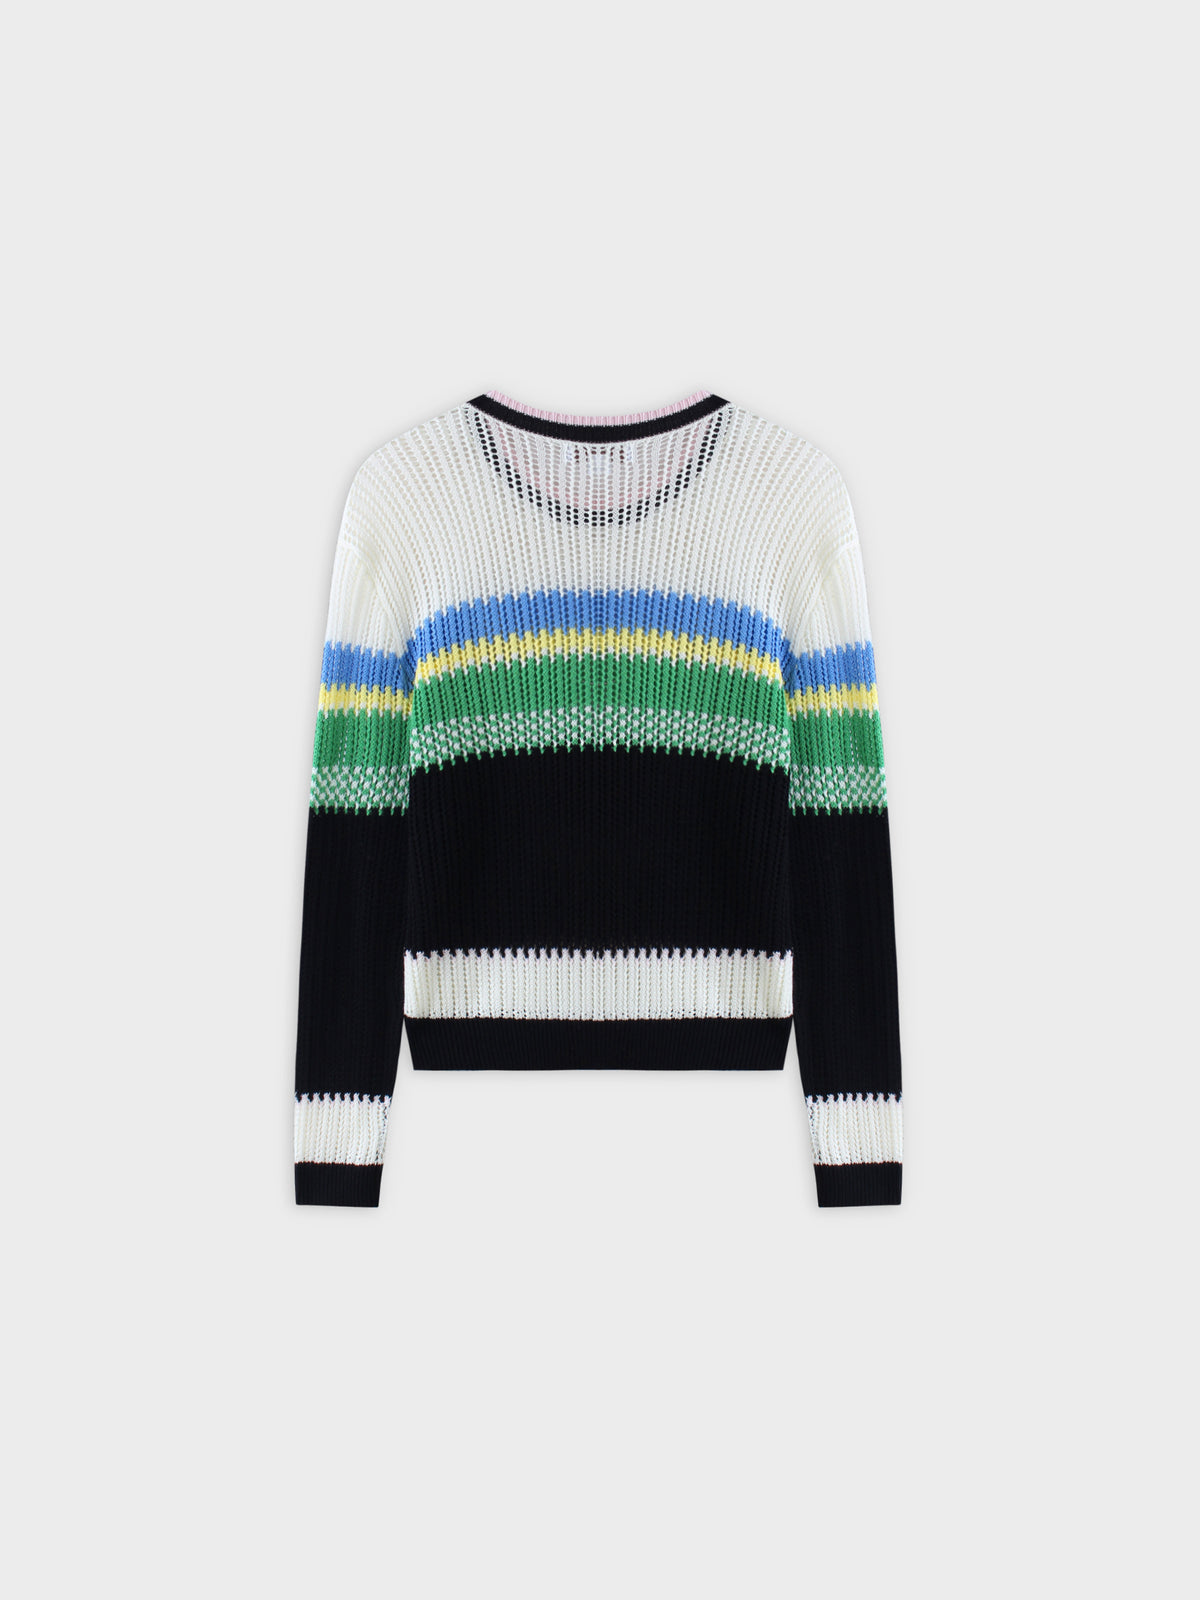 Mesh Striped Sweater-Light Blue/Yellow/Green